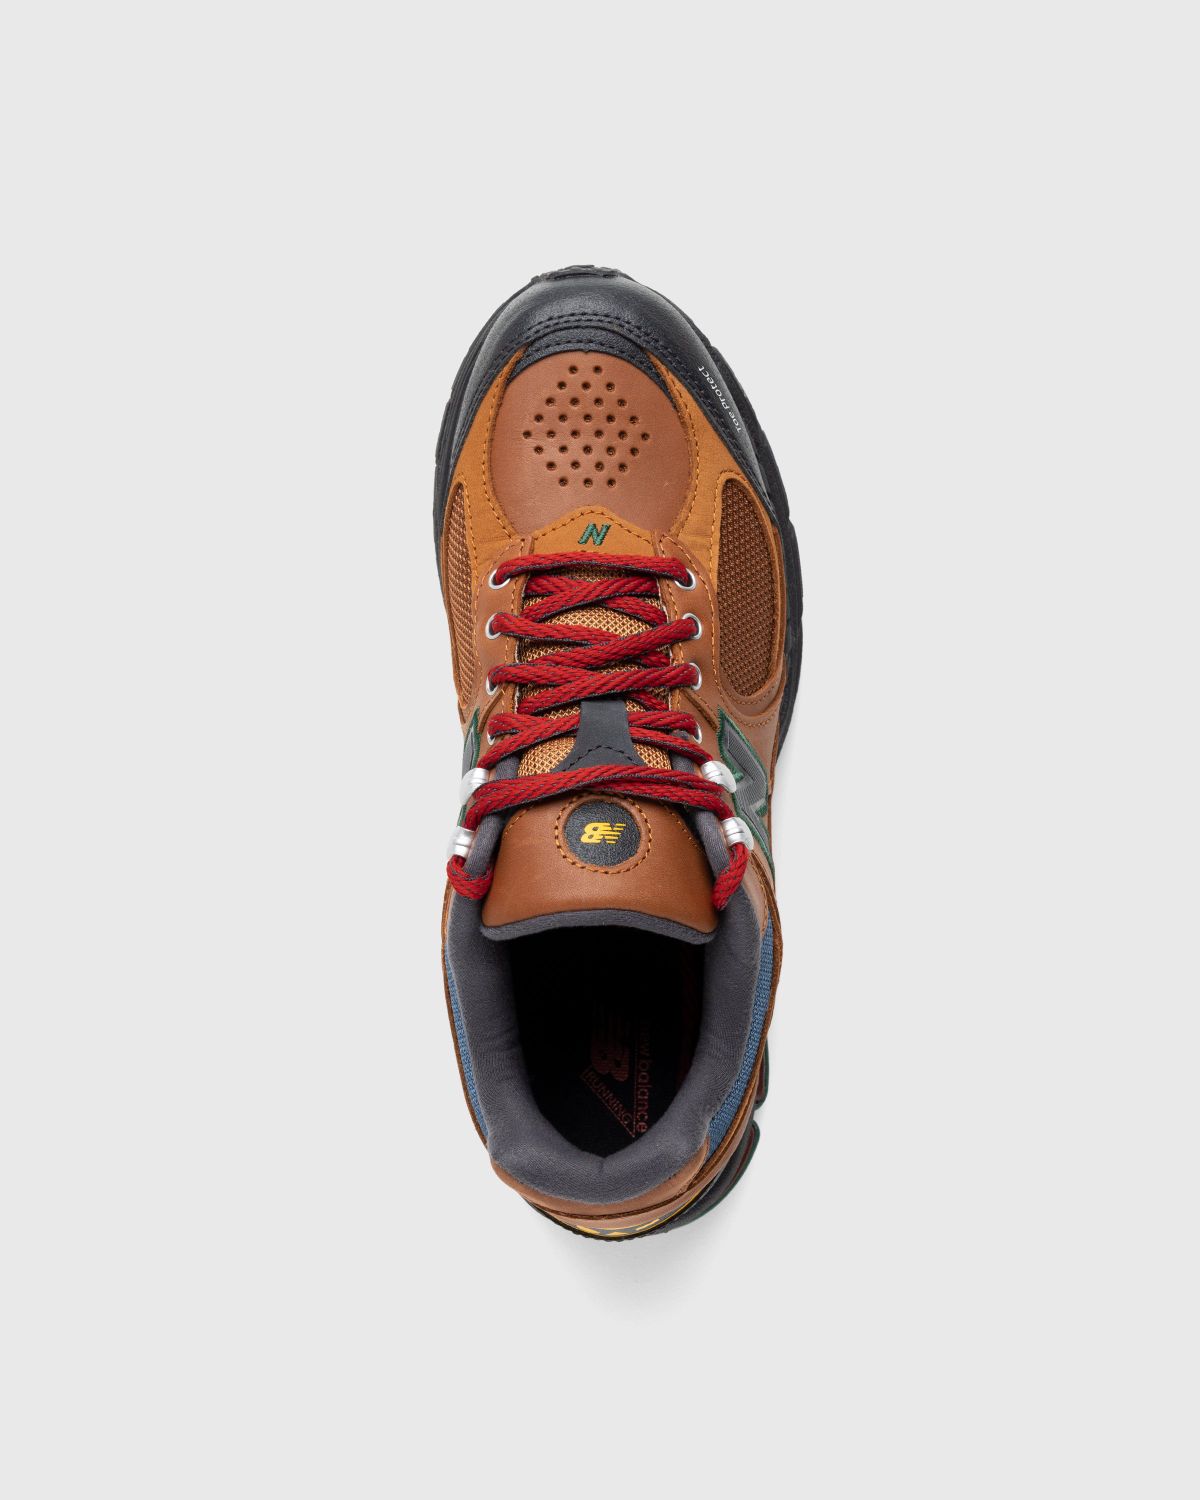 New Balance – M2002RWM Brown/Team Red - Low Top Sneakers - Brown - Image 5